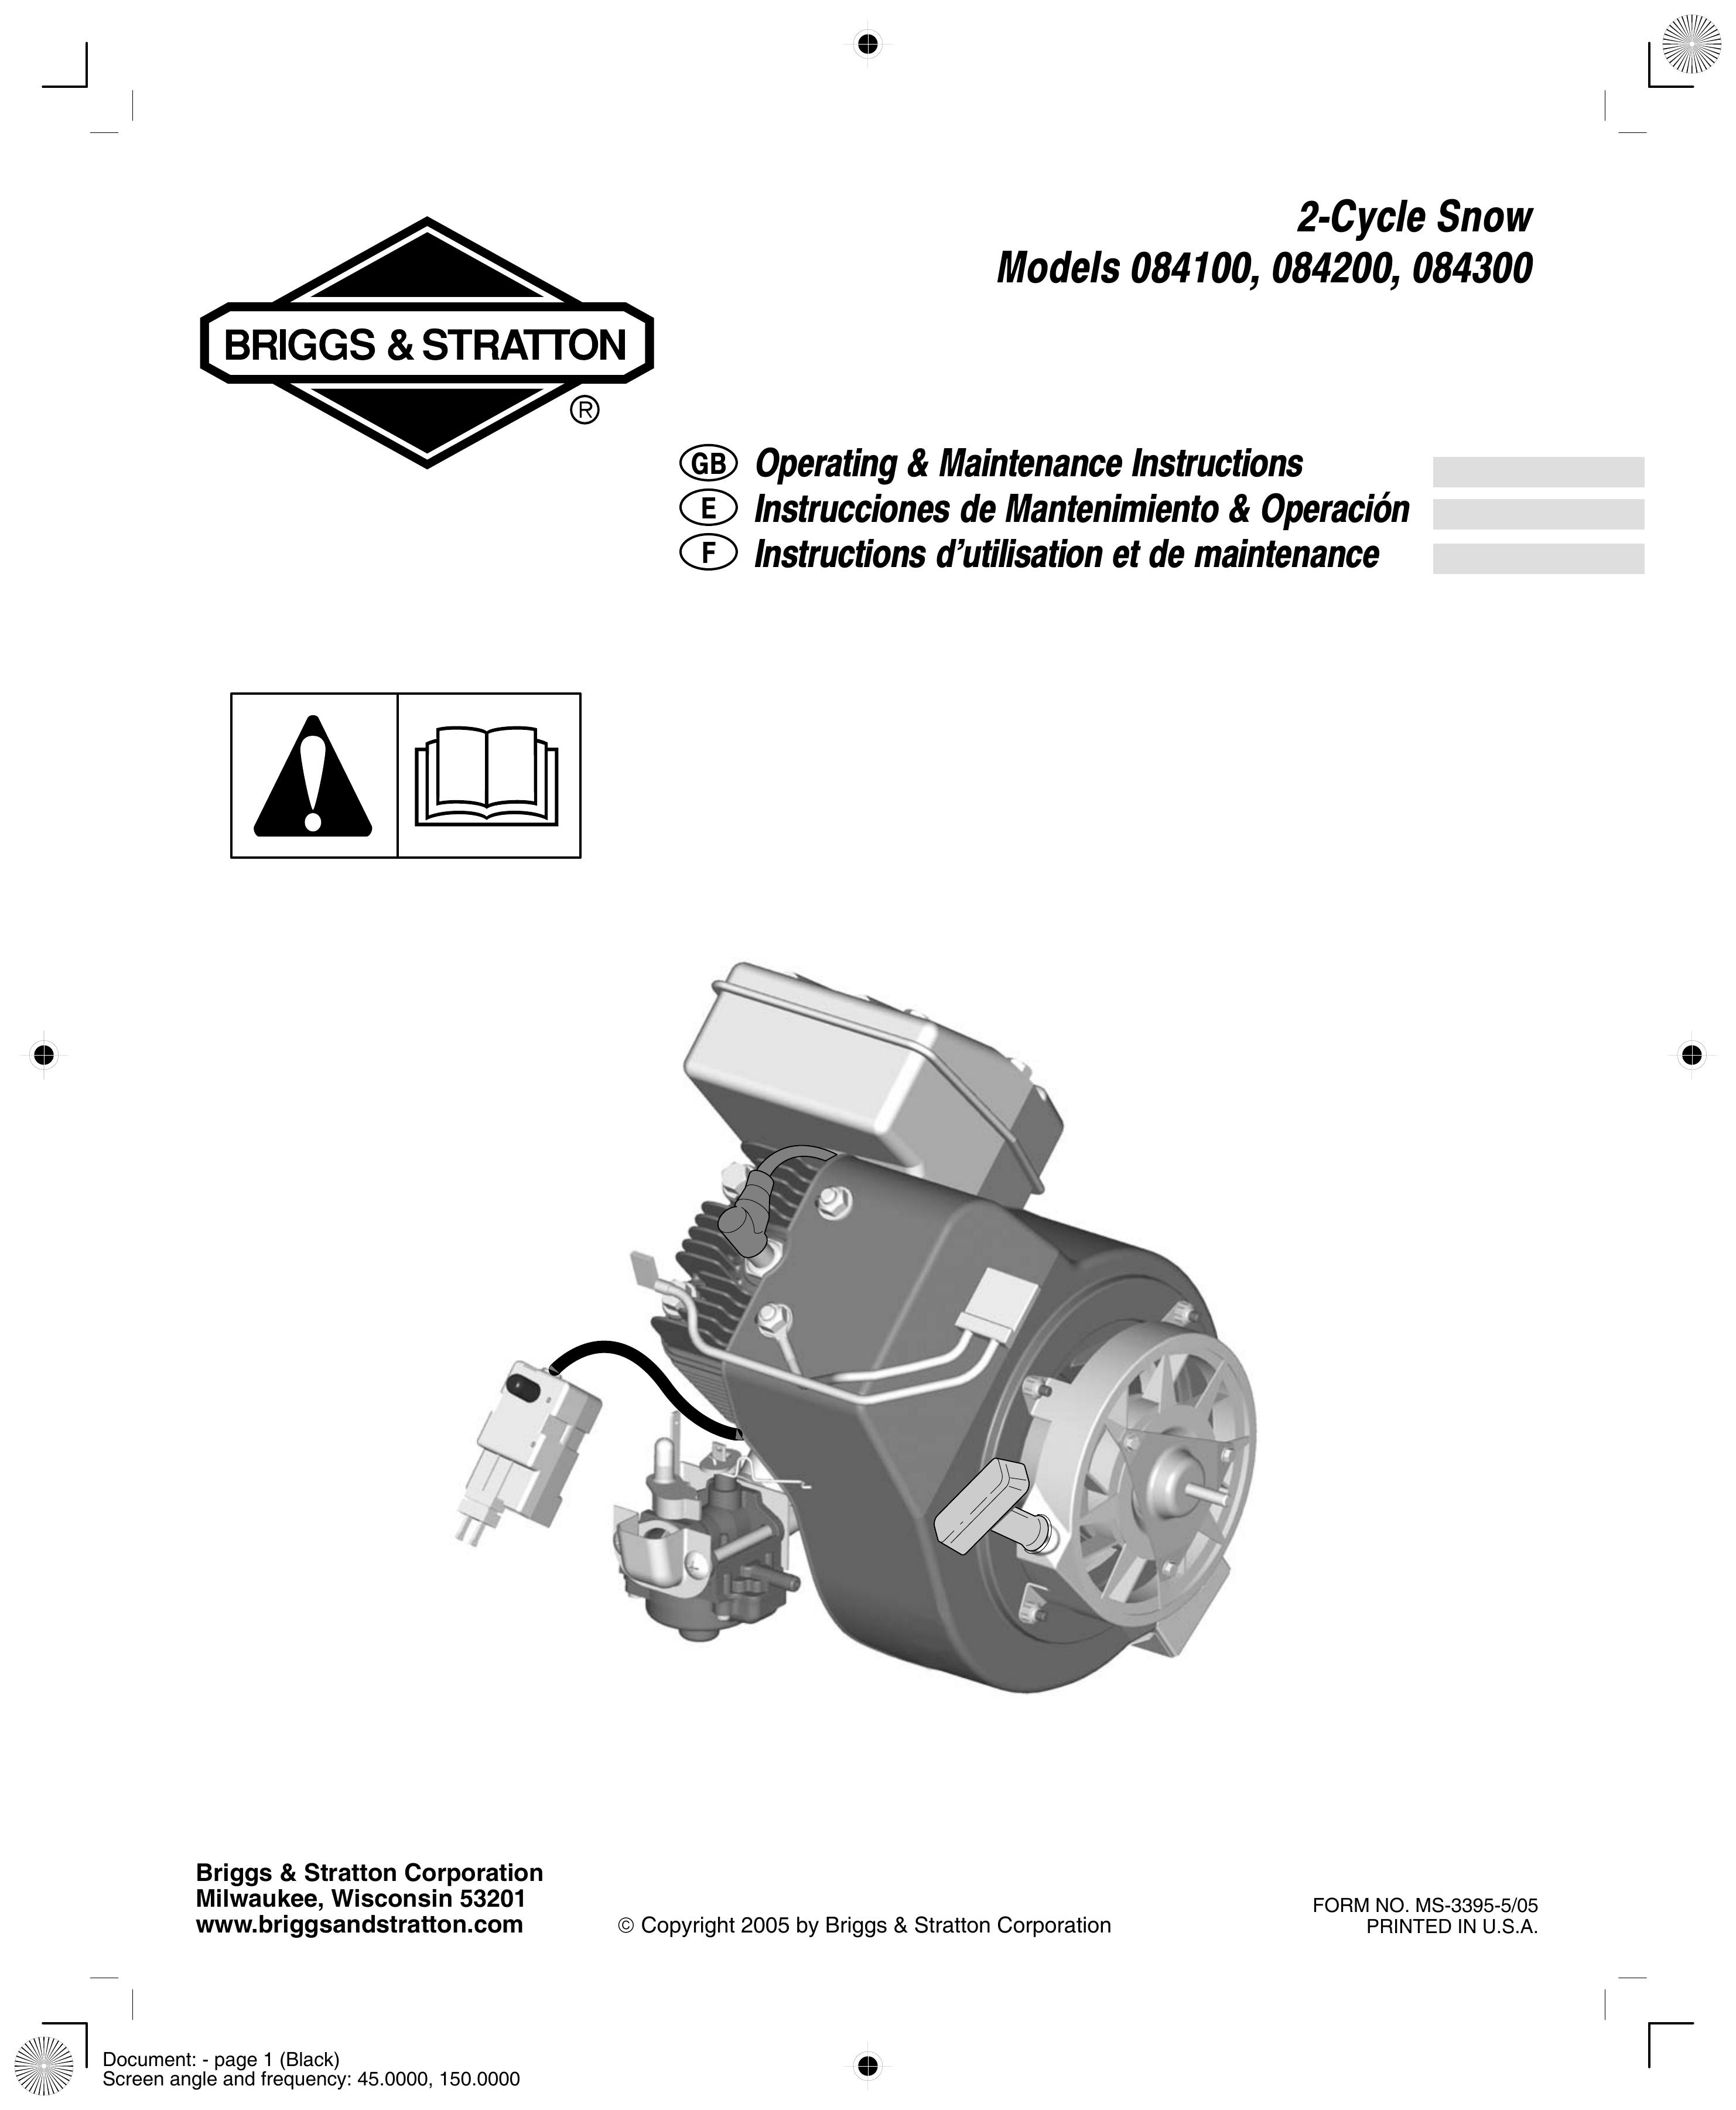 Briggs & Stratton 84100 Snow Blower User Manual